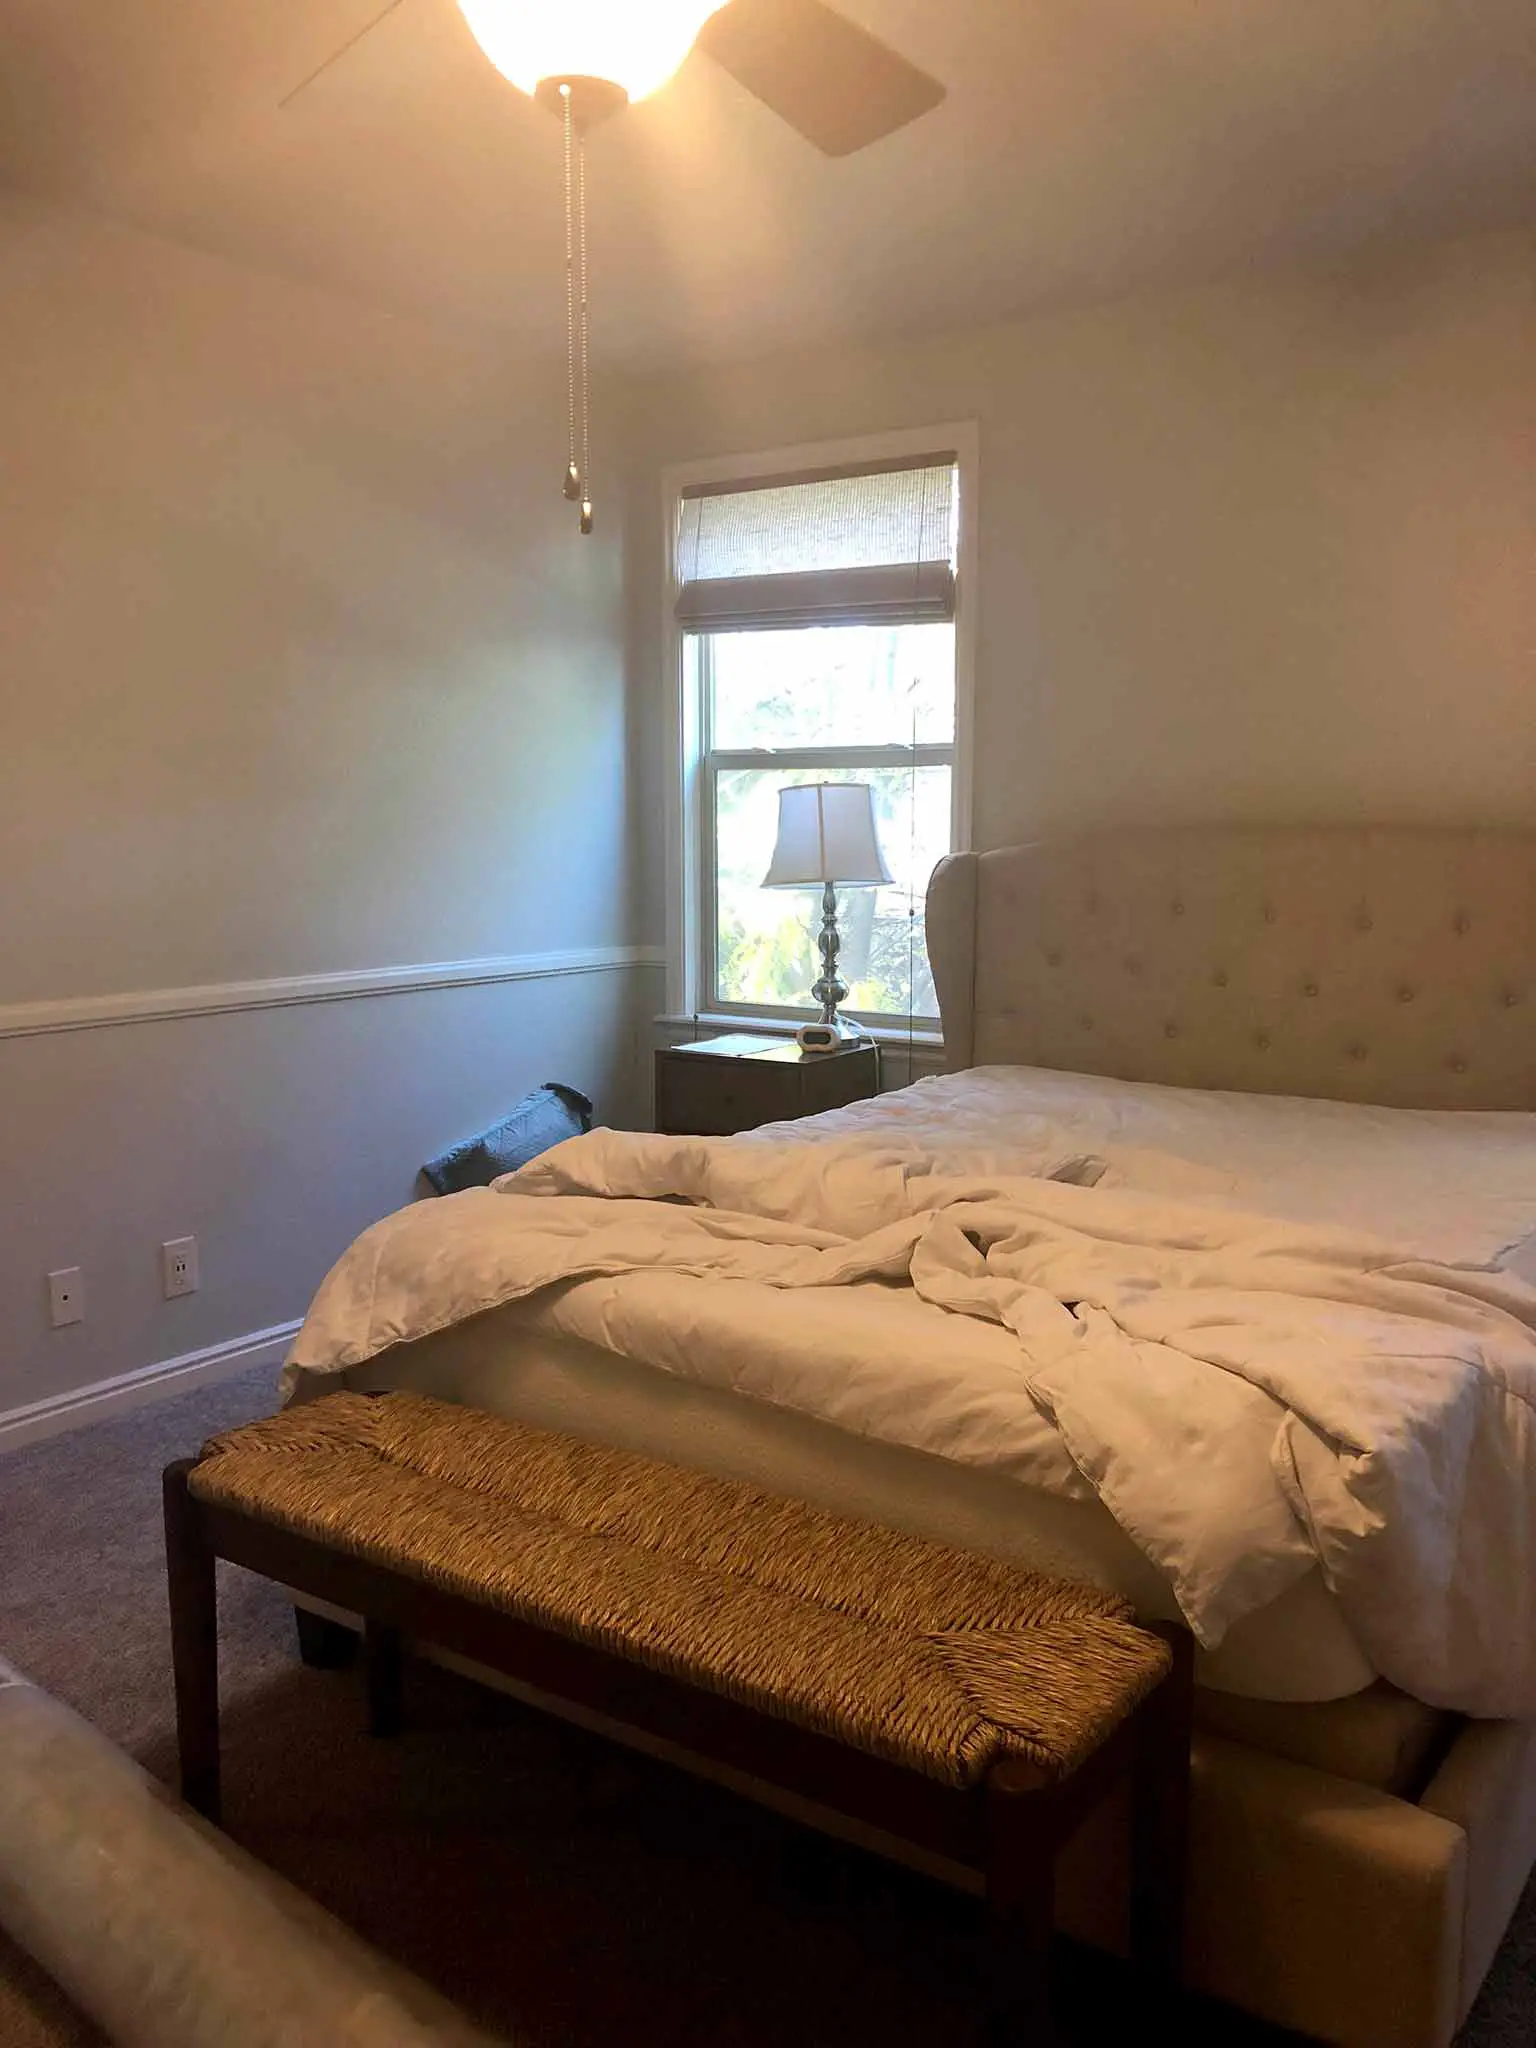 BEFORE - Mid Century Modern, Coastal, Master Bedroom Makeover - That Homebird Life Blog